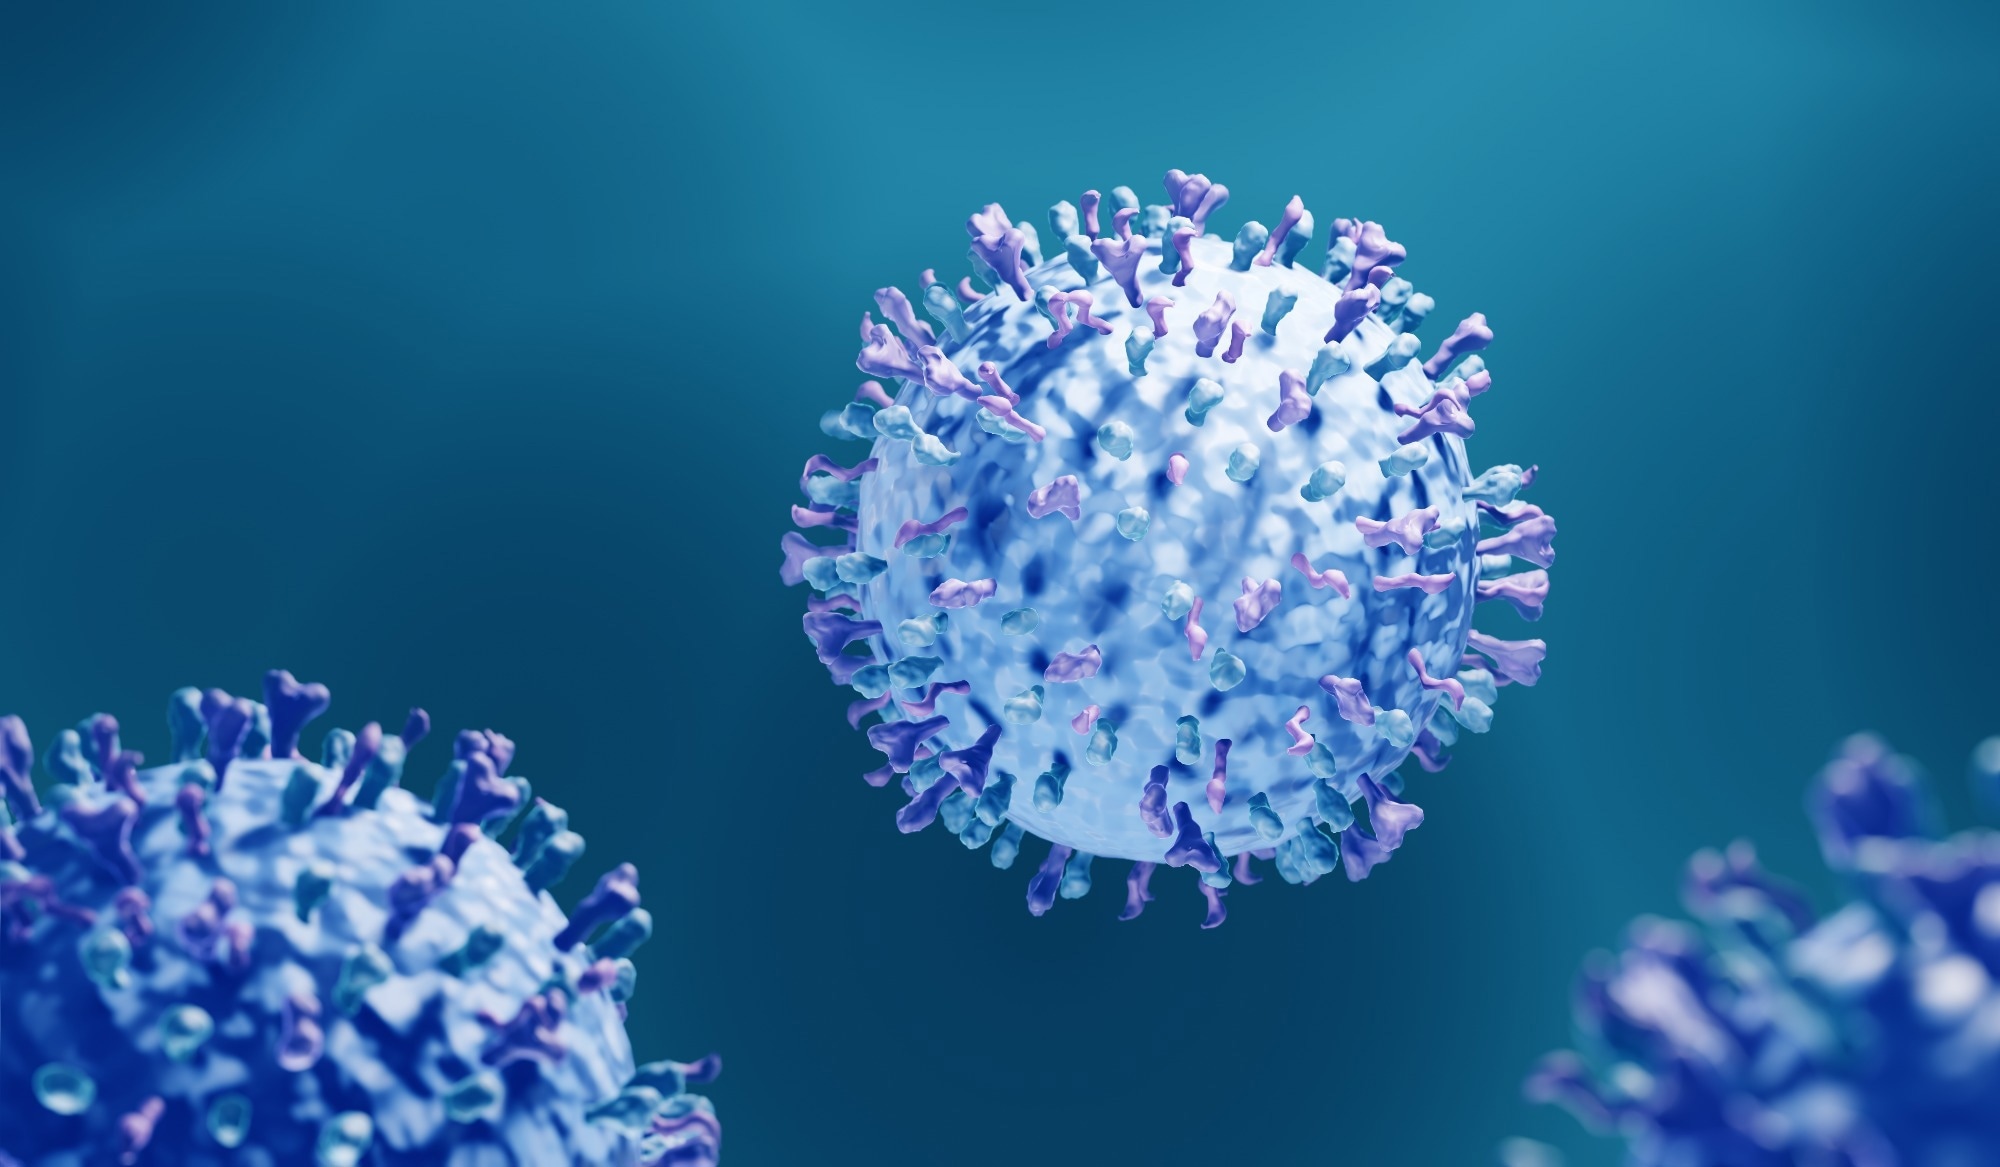 Study: Development of mRNA vaccines against respiratory syncytial virus (RSV). Image Credit: ART-ur/Shutterstock